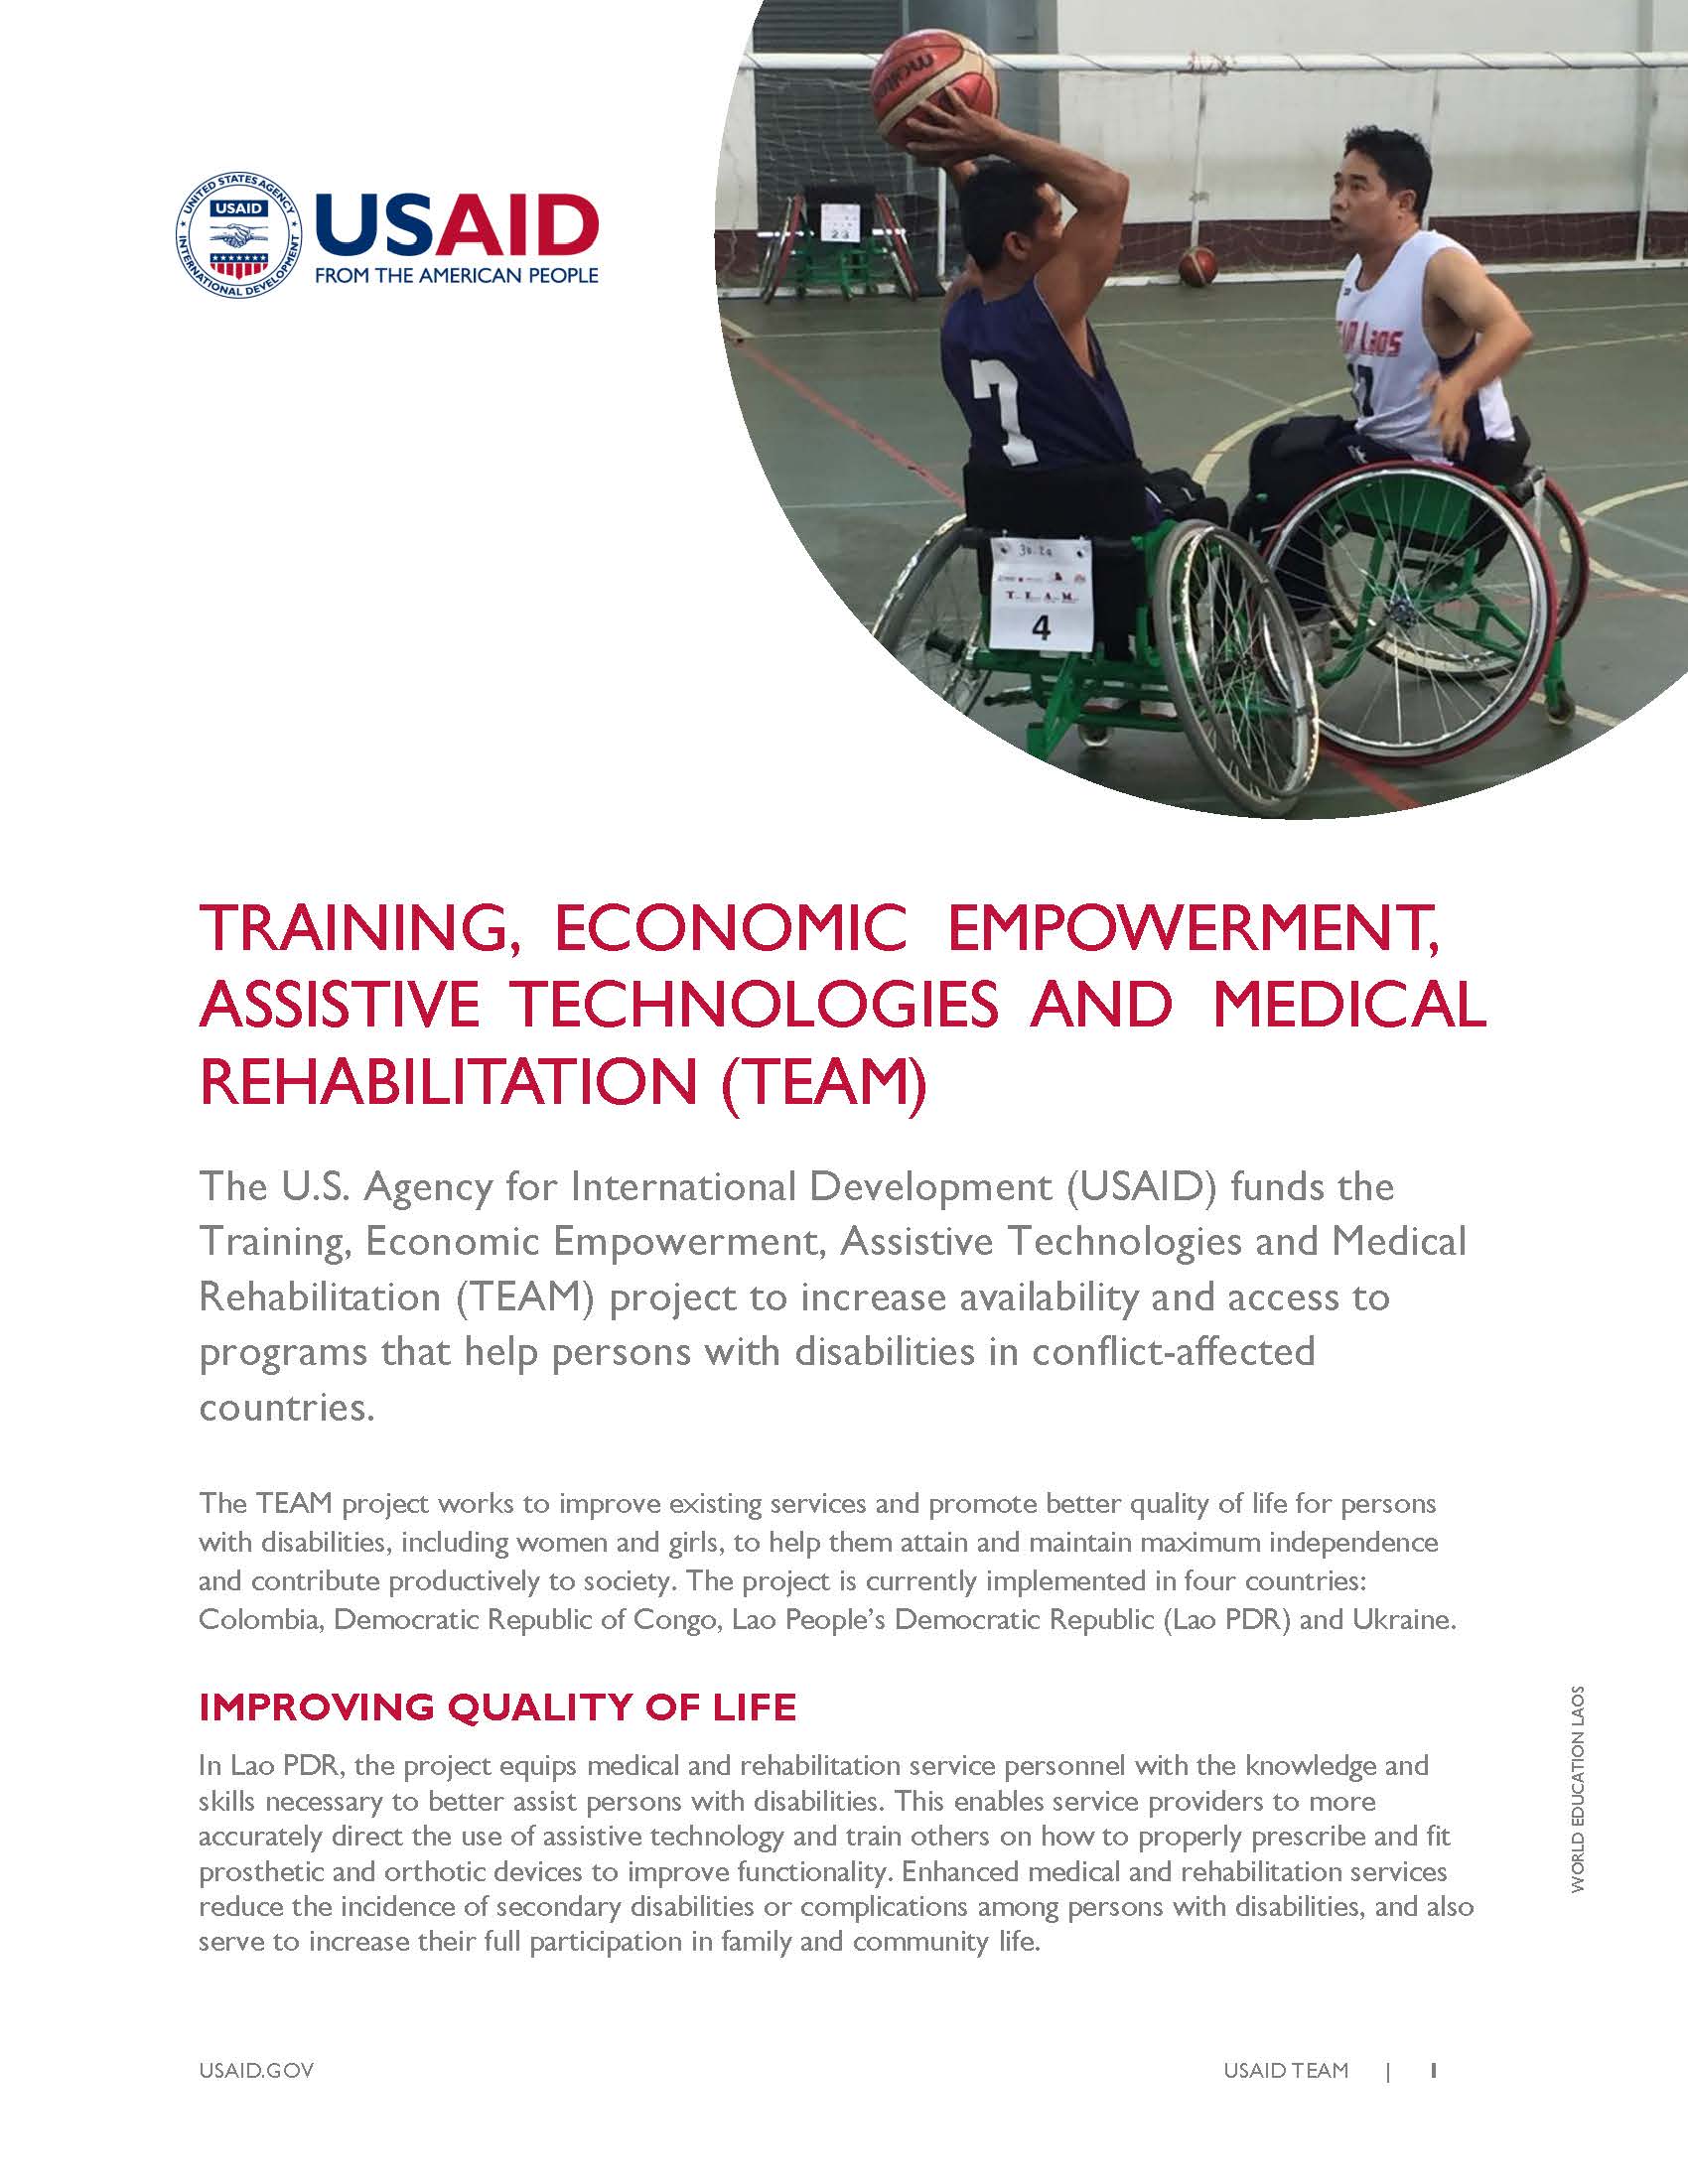 Training, Economic Empowerment, Assistive Technologies and Medical Rehabilitation (TEAM)